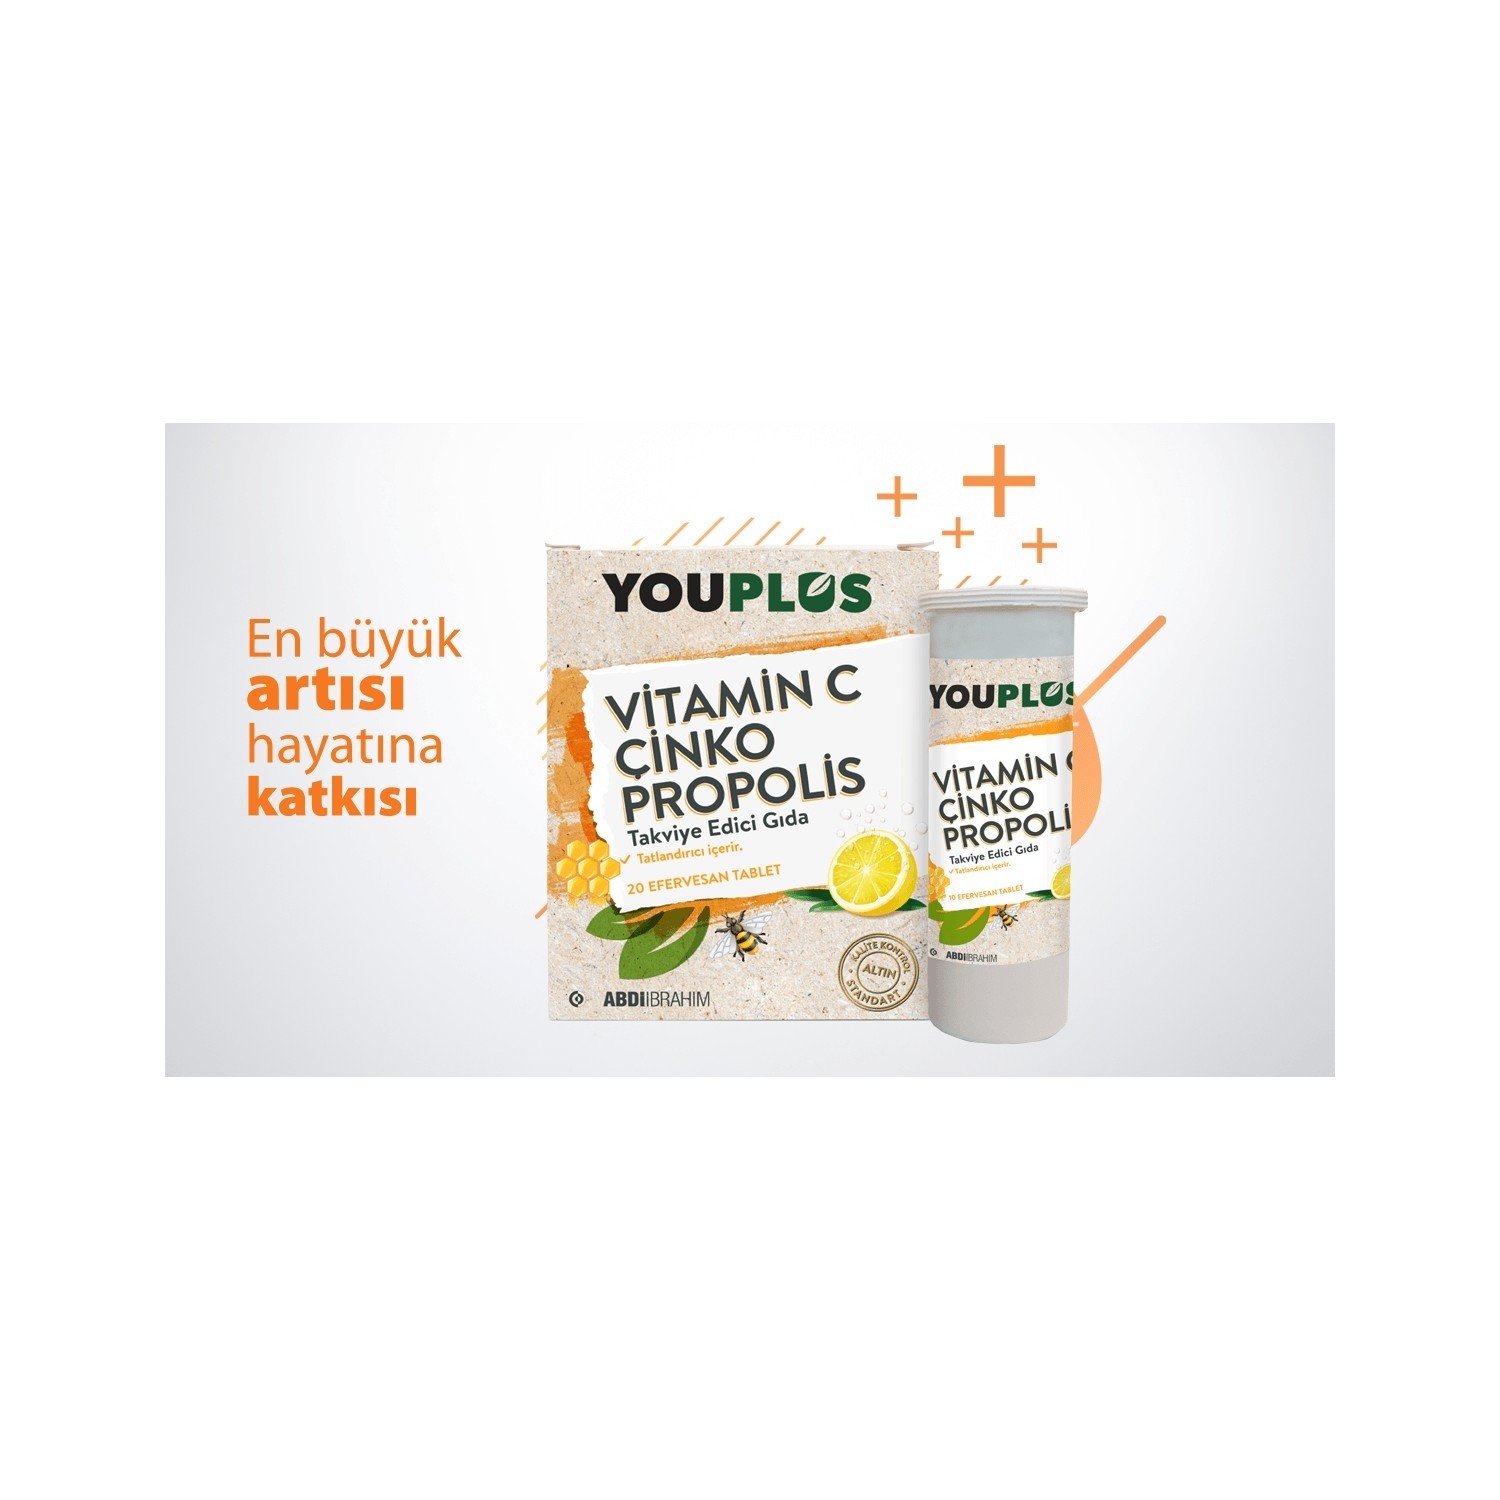 Youplus Vitamin C Cinko Propolis Efervesan Tablet Fiyati